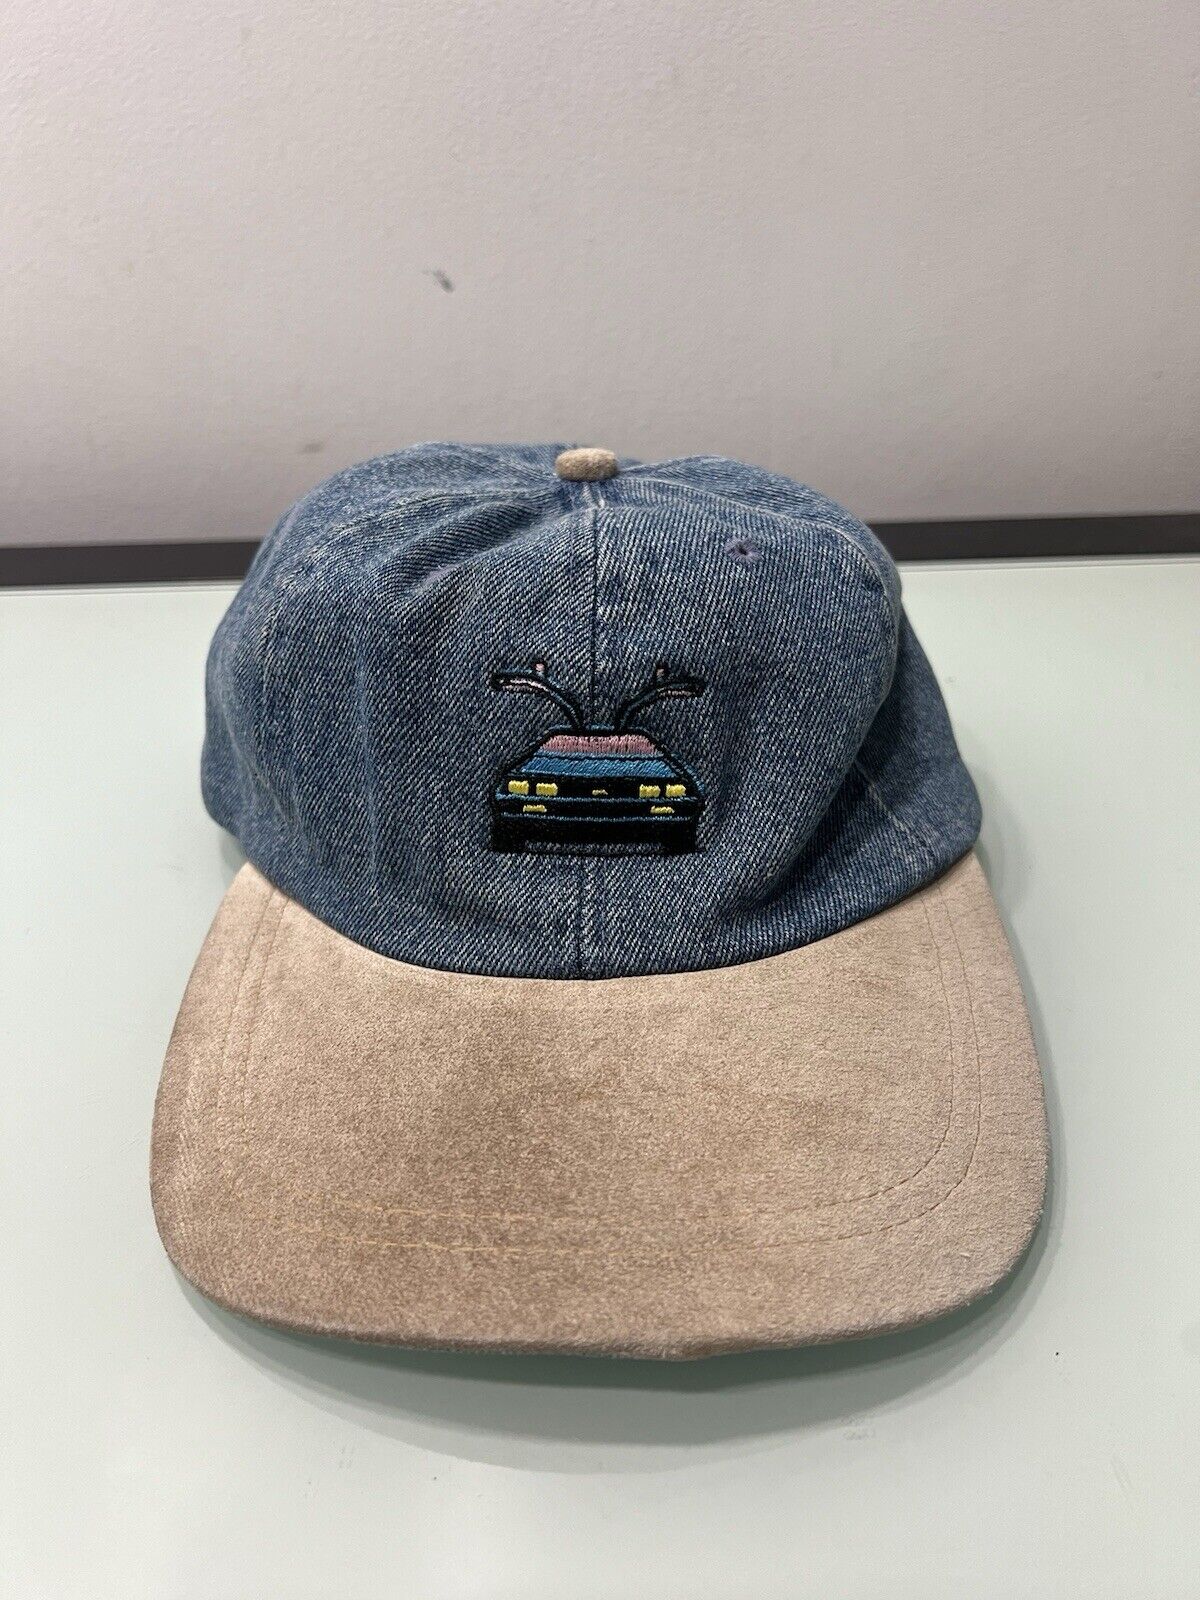 Vintage DeLorean Denim Hat